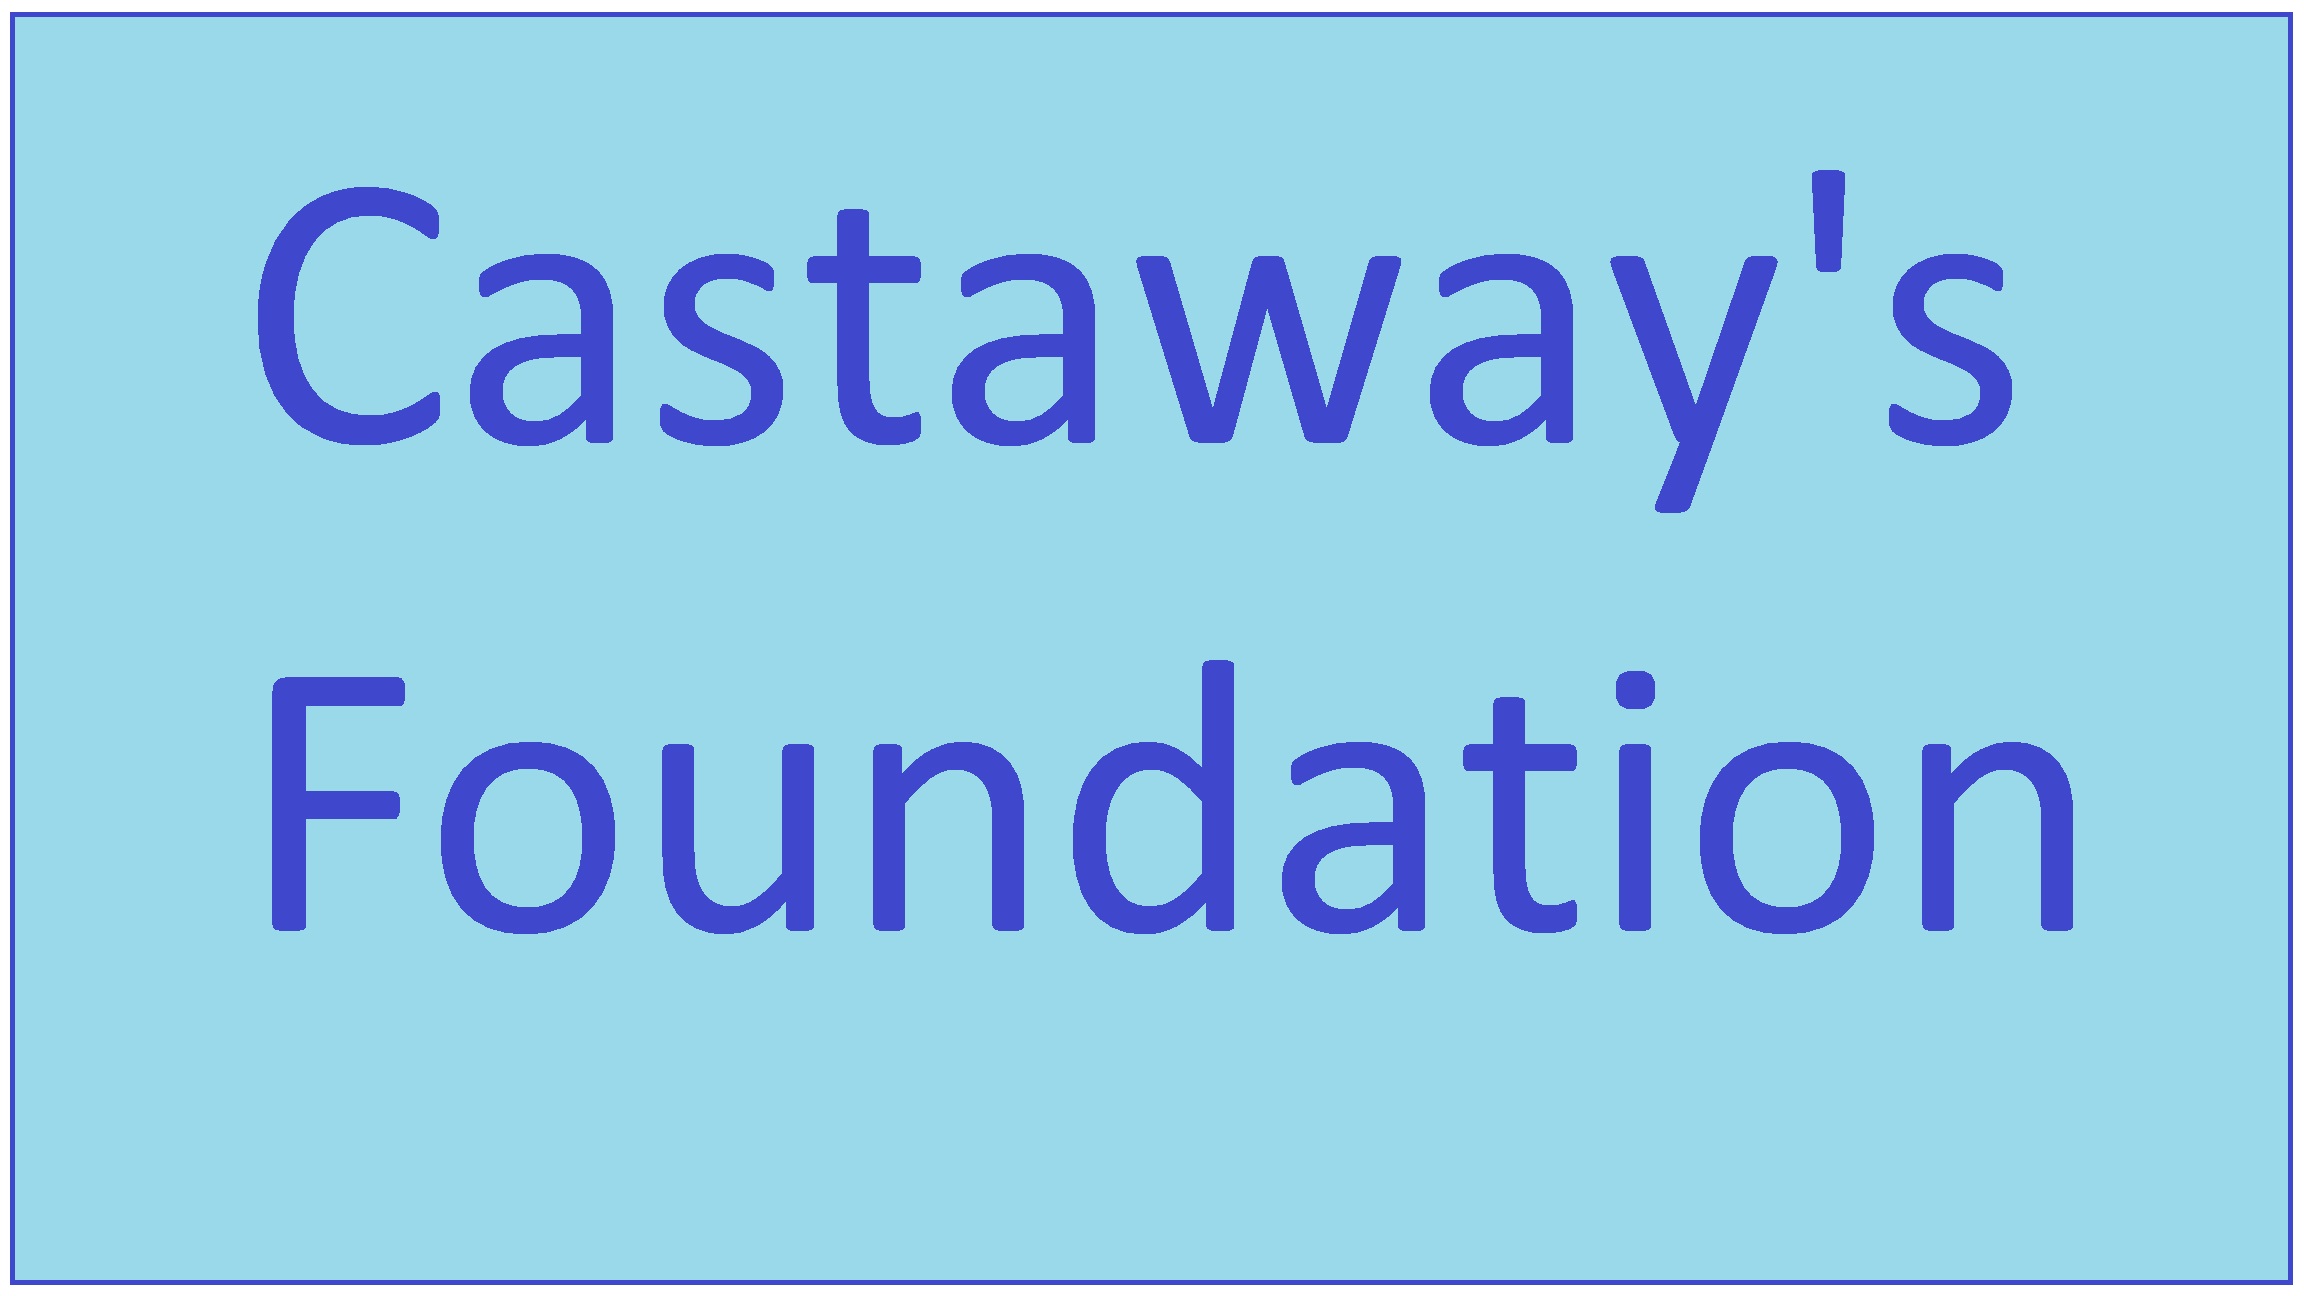 Castaway's Foundation